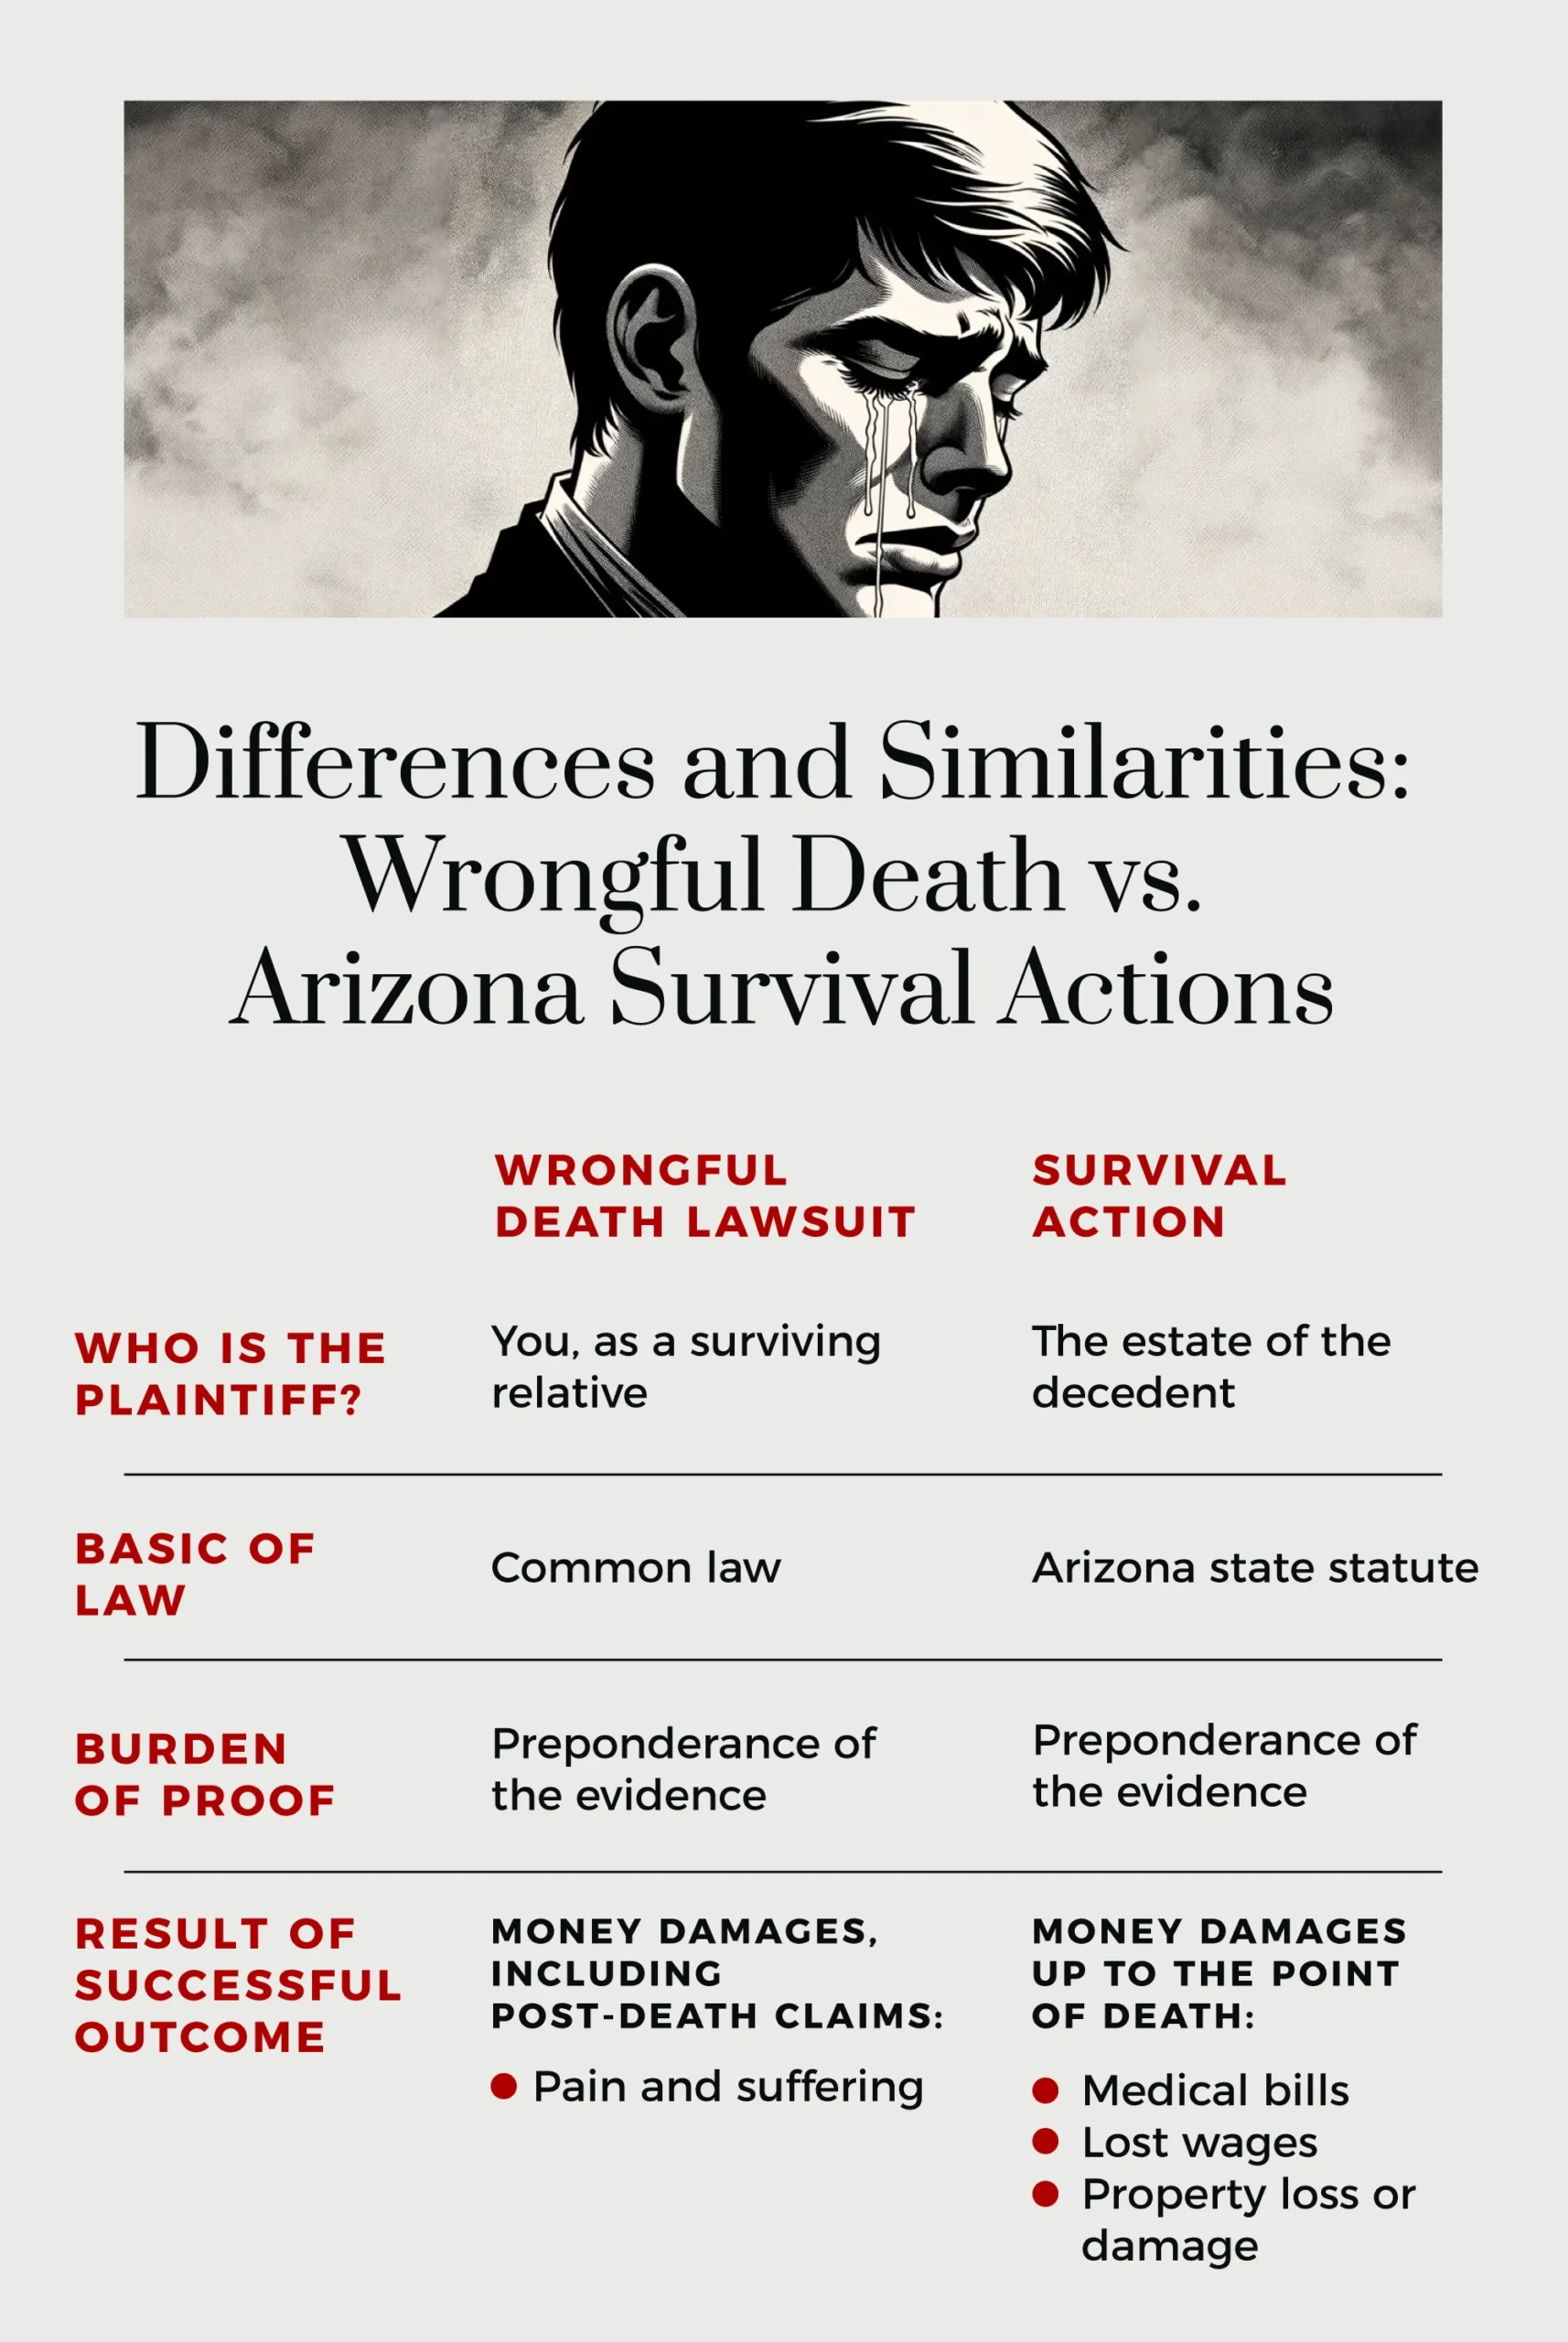 differences and similarities between wrongful death versus arizona survival actiona